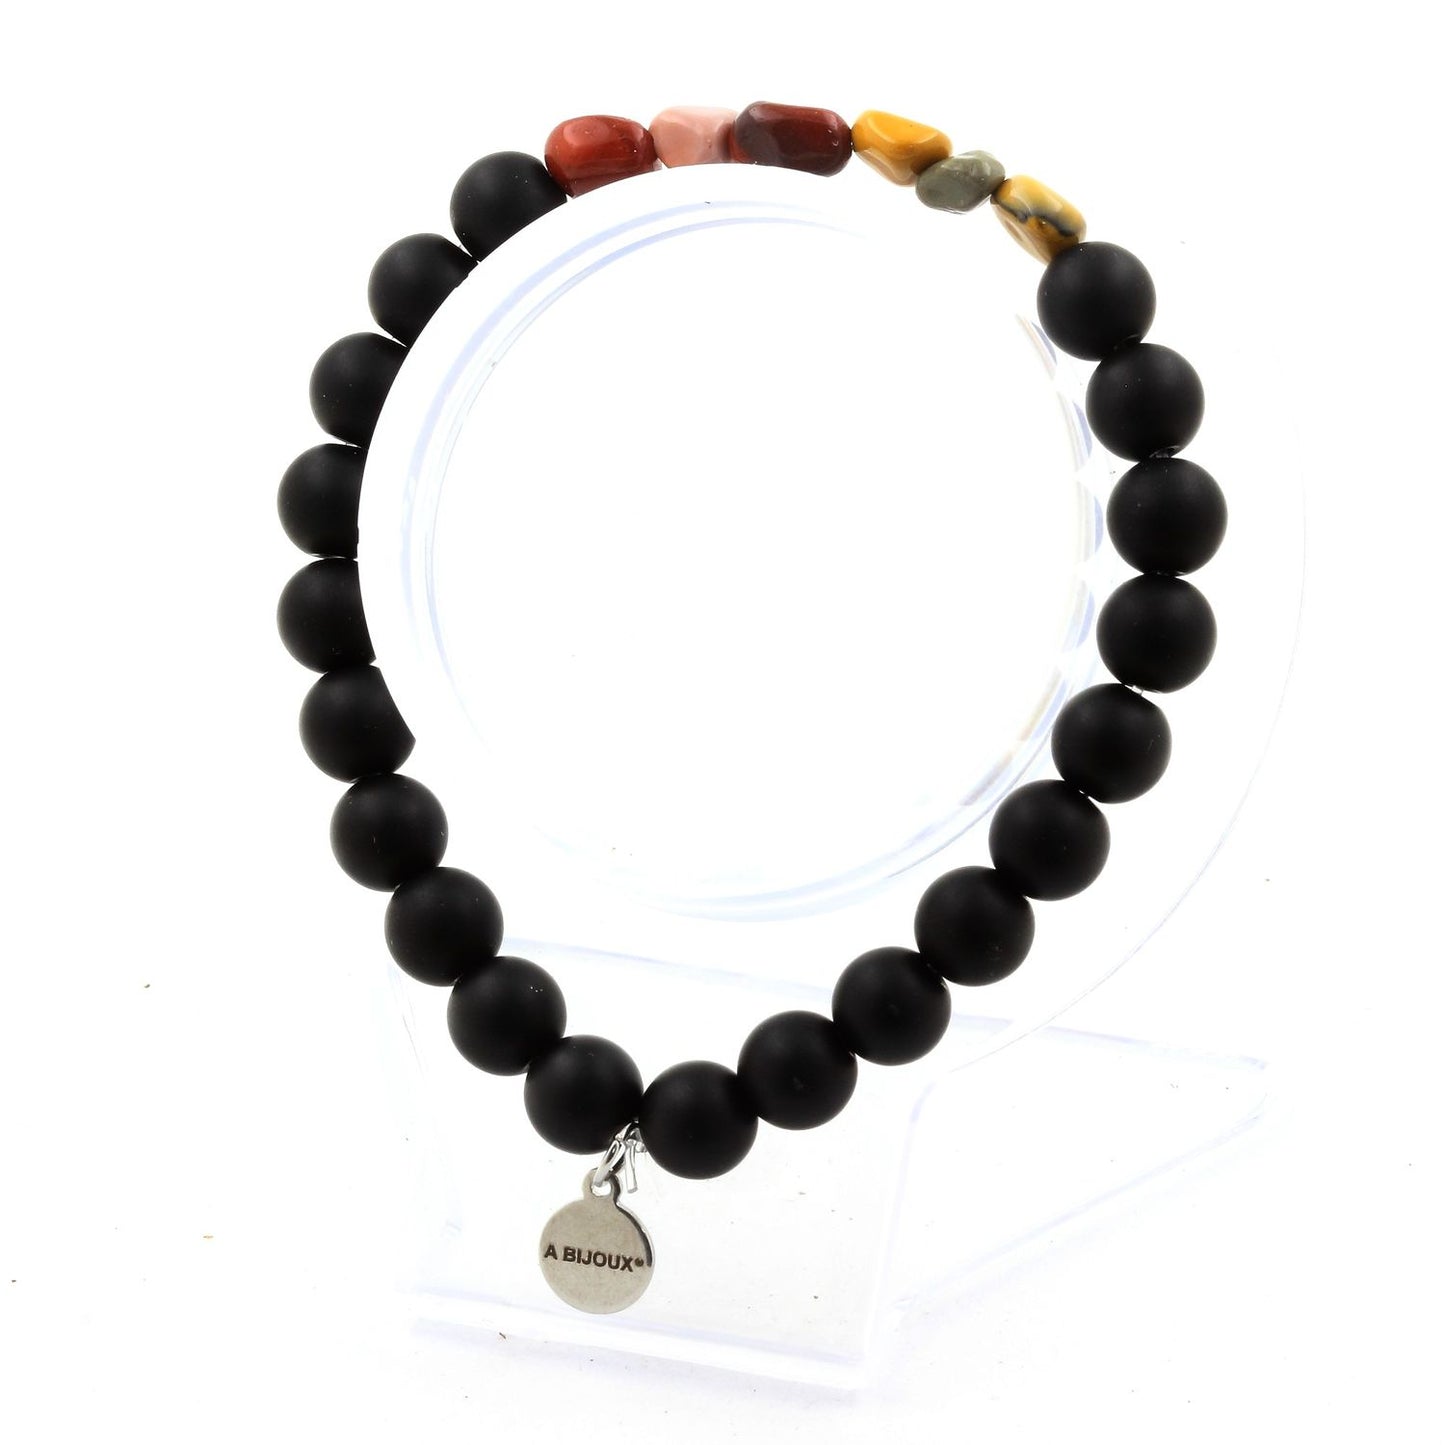 Mookaite d'Australie + Perles Onyx noir mat. Bracelet en Perles naturelles